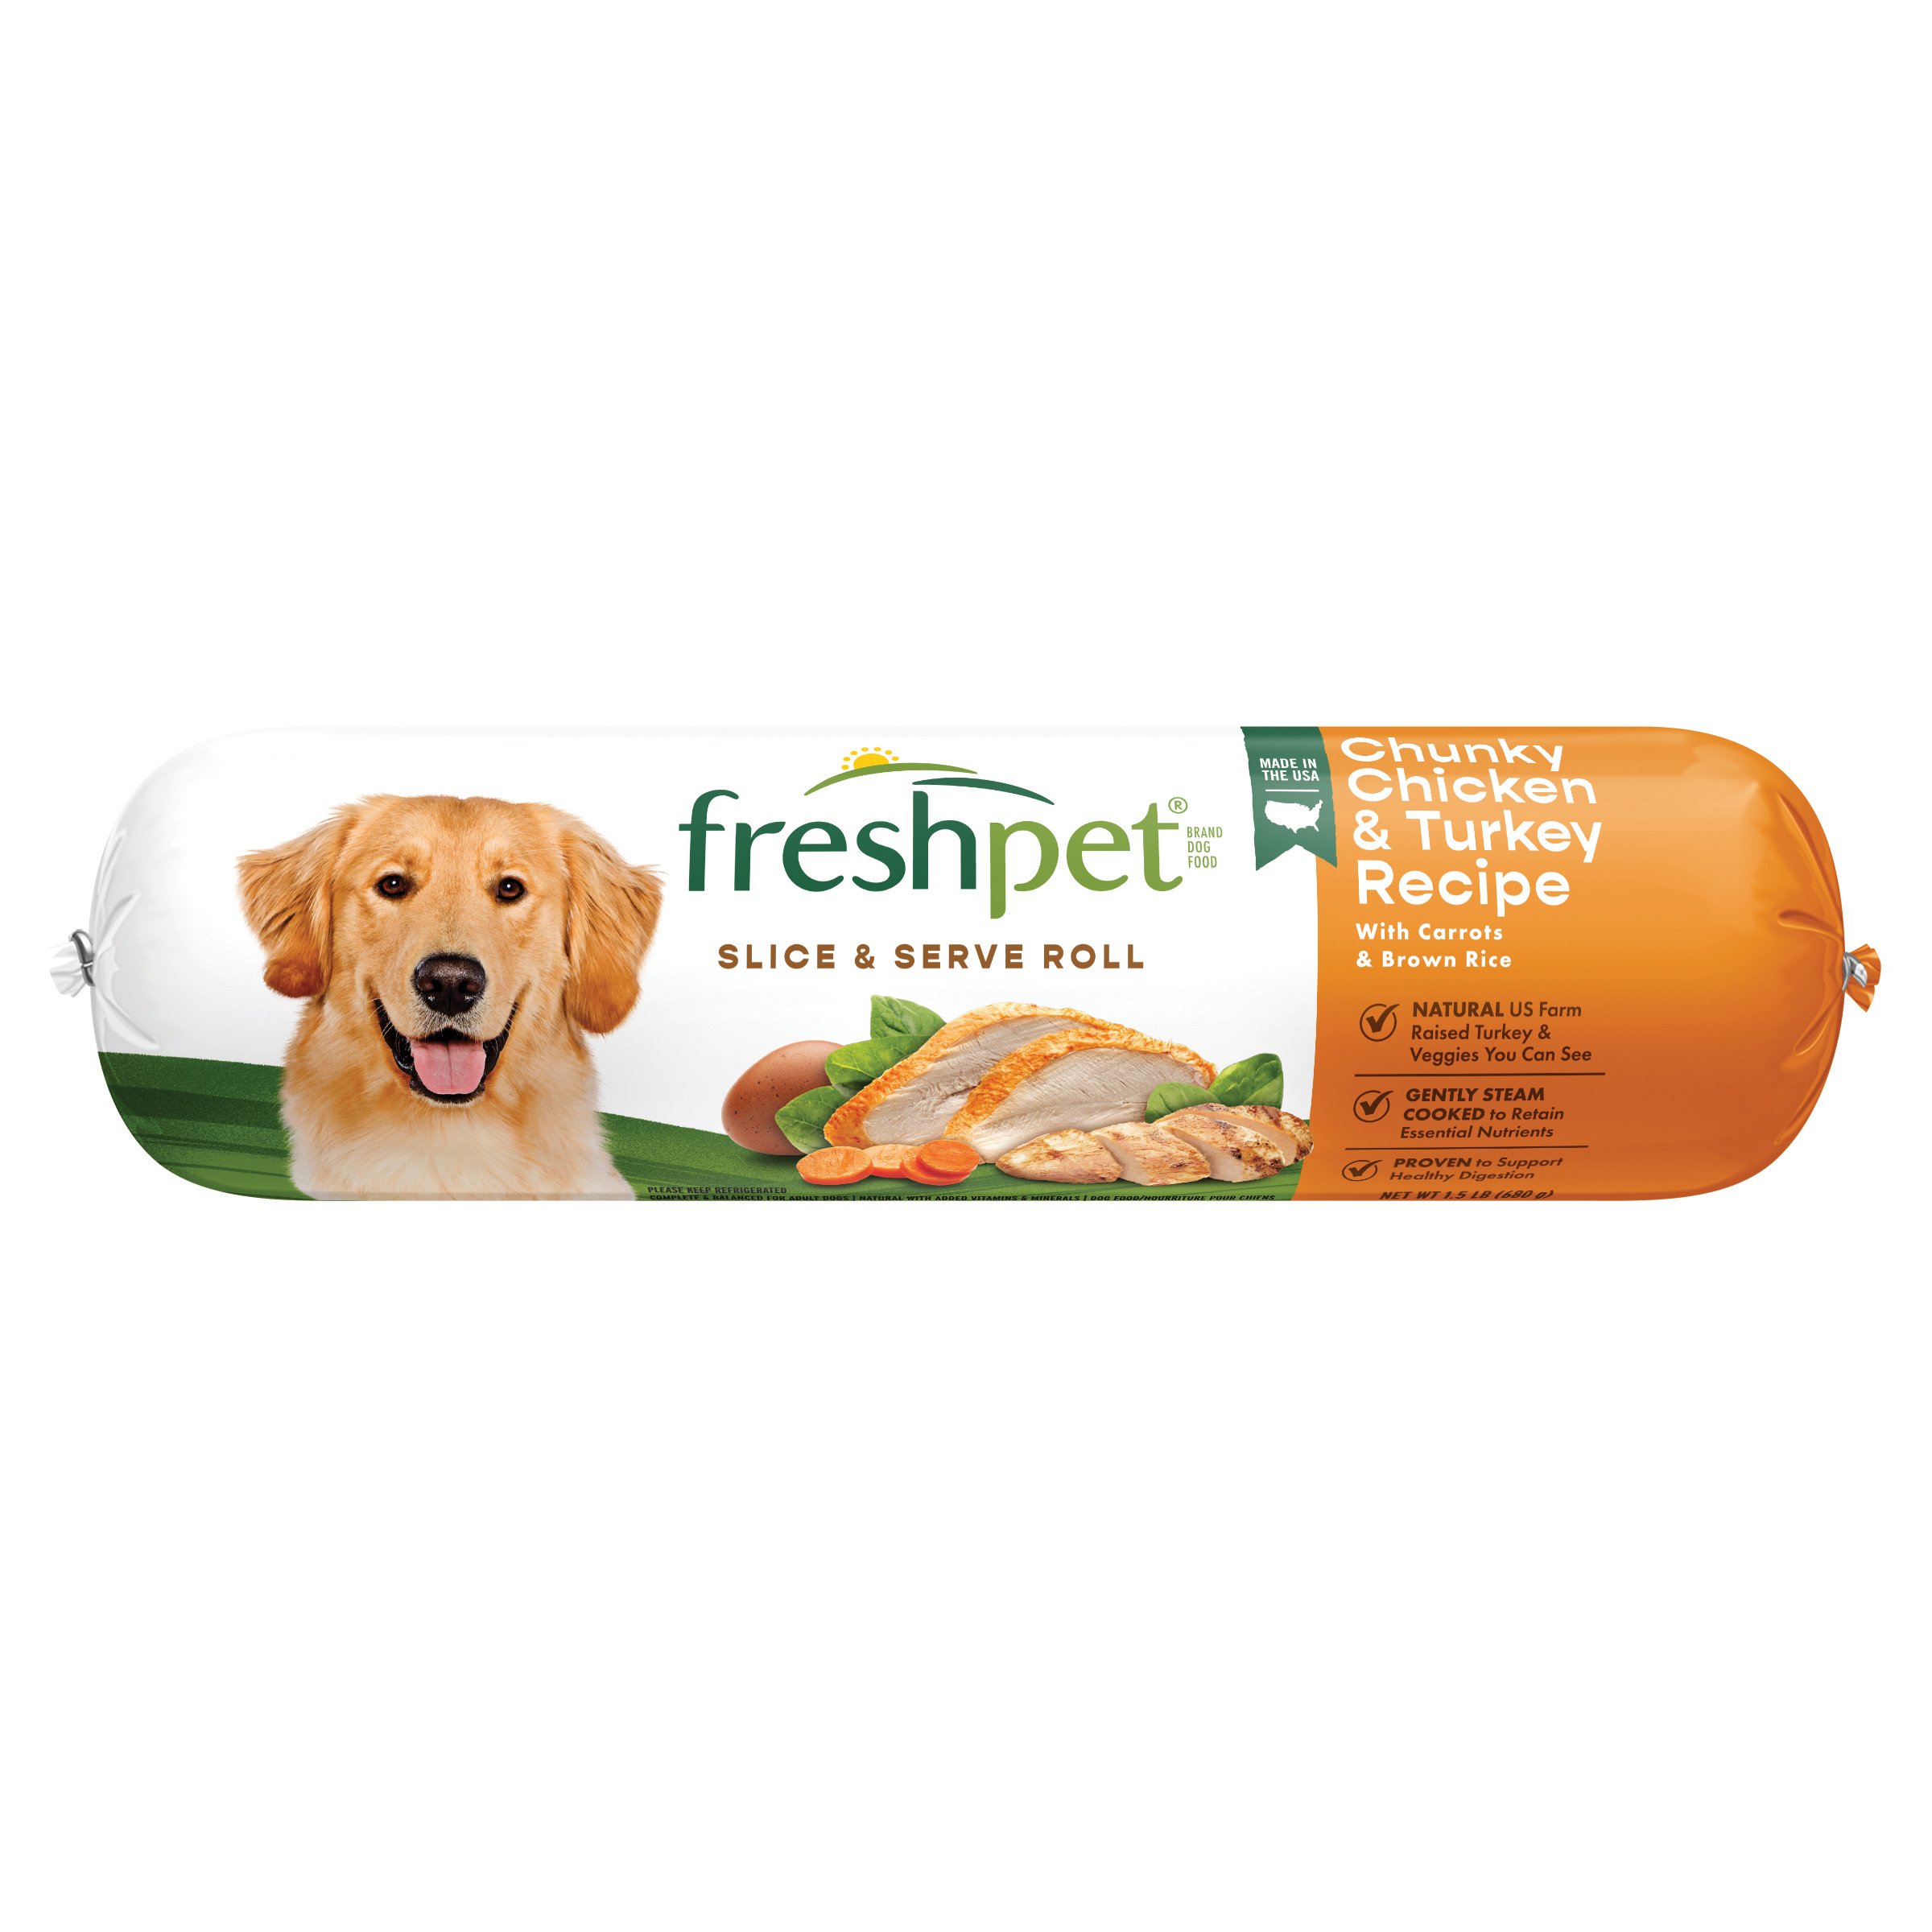 can you keep dog food fresh